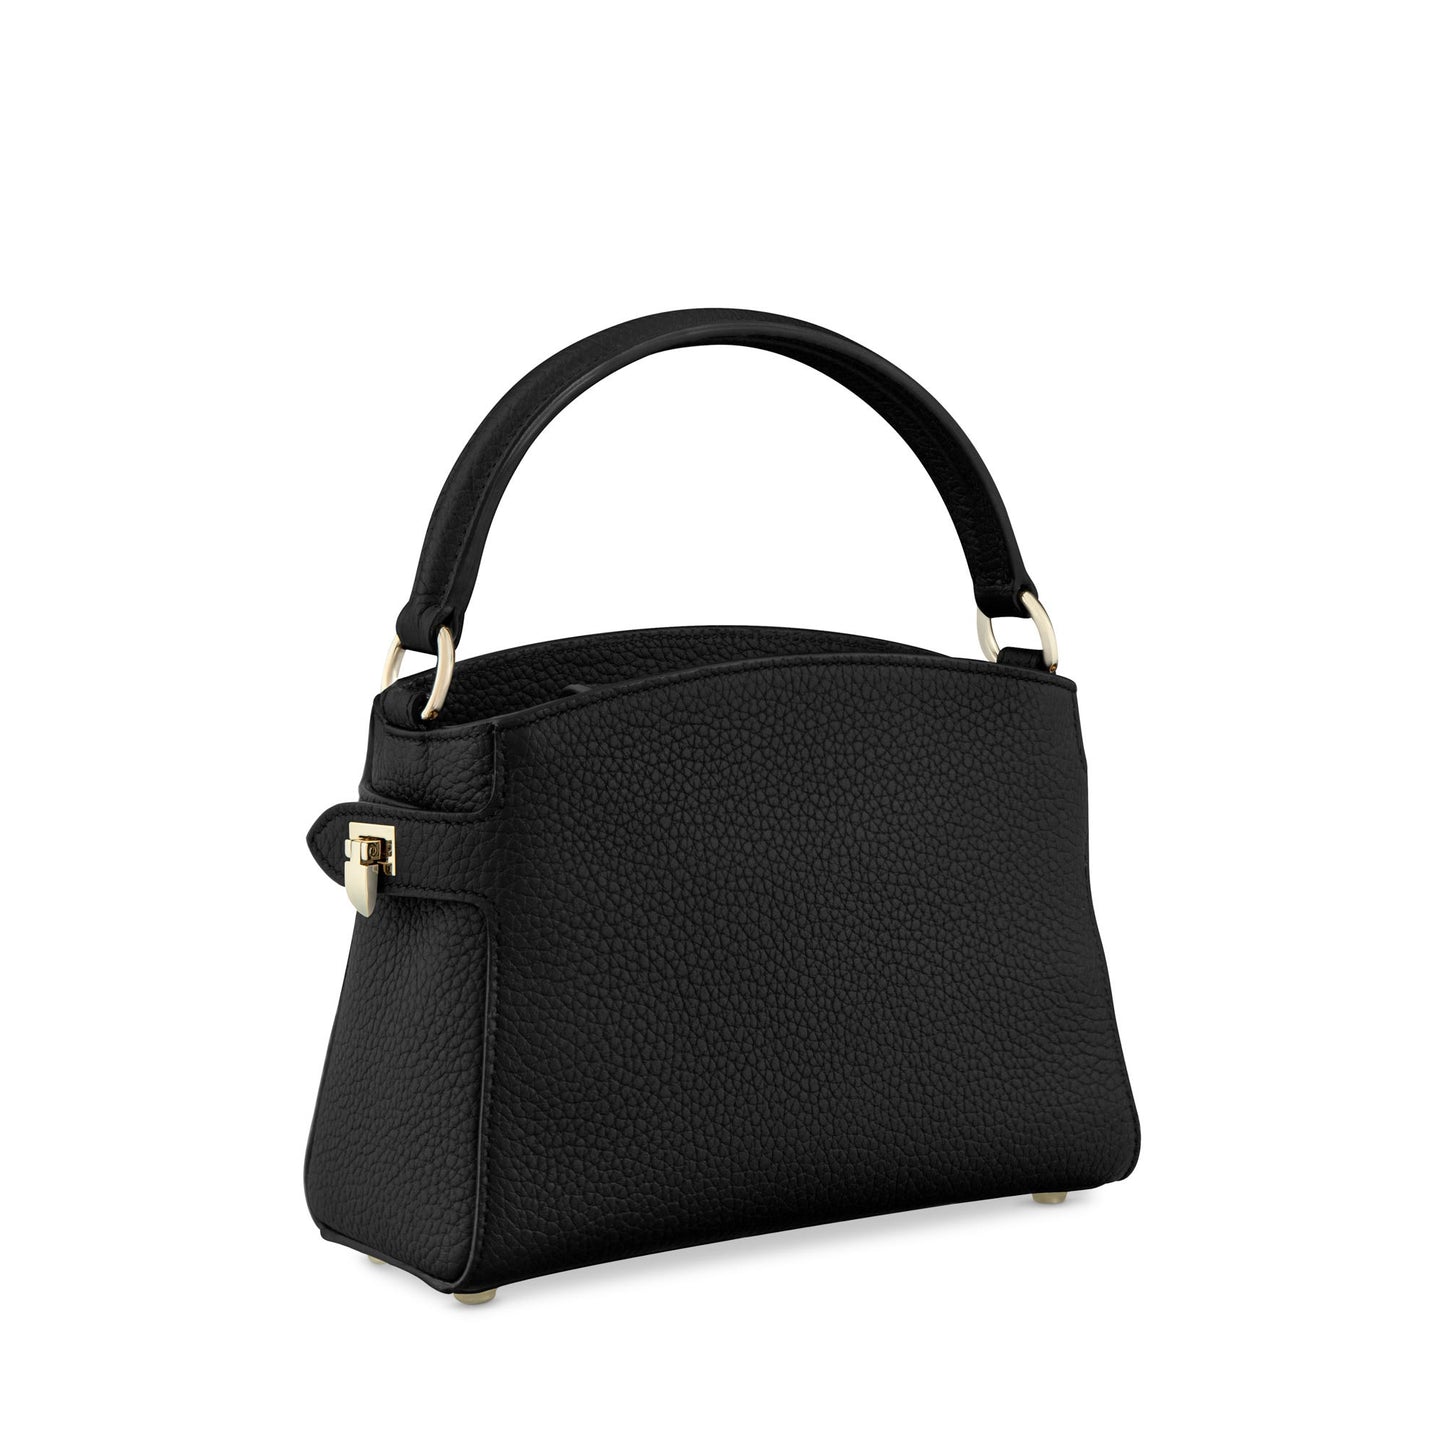 Taylor Top Handle Mini Handbag in Soft Grain Leather